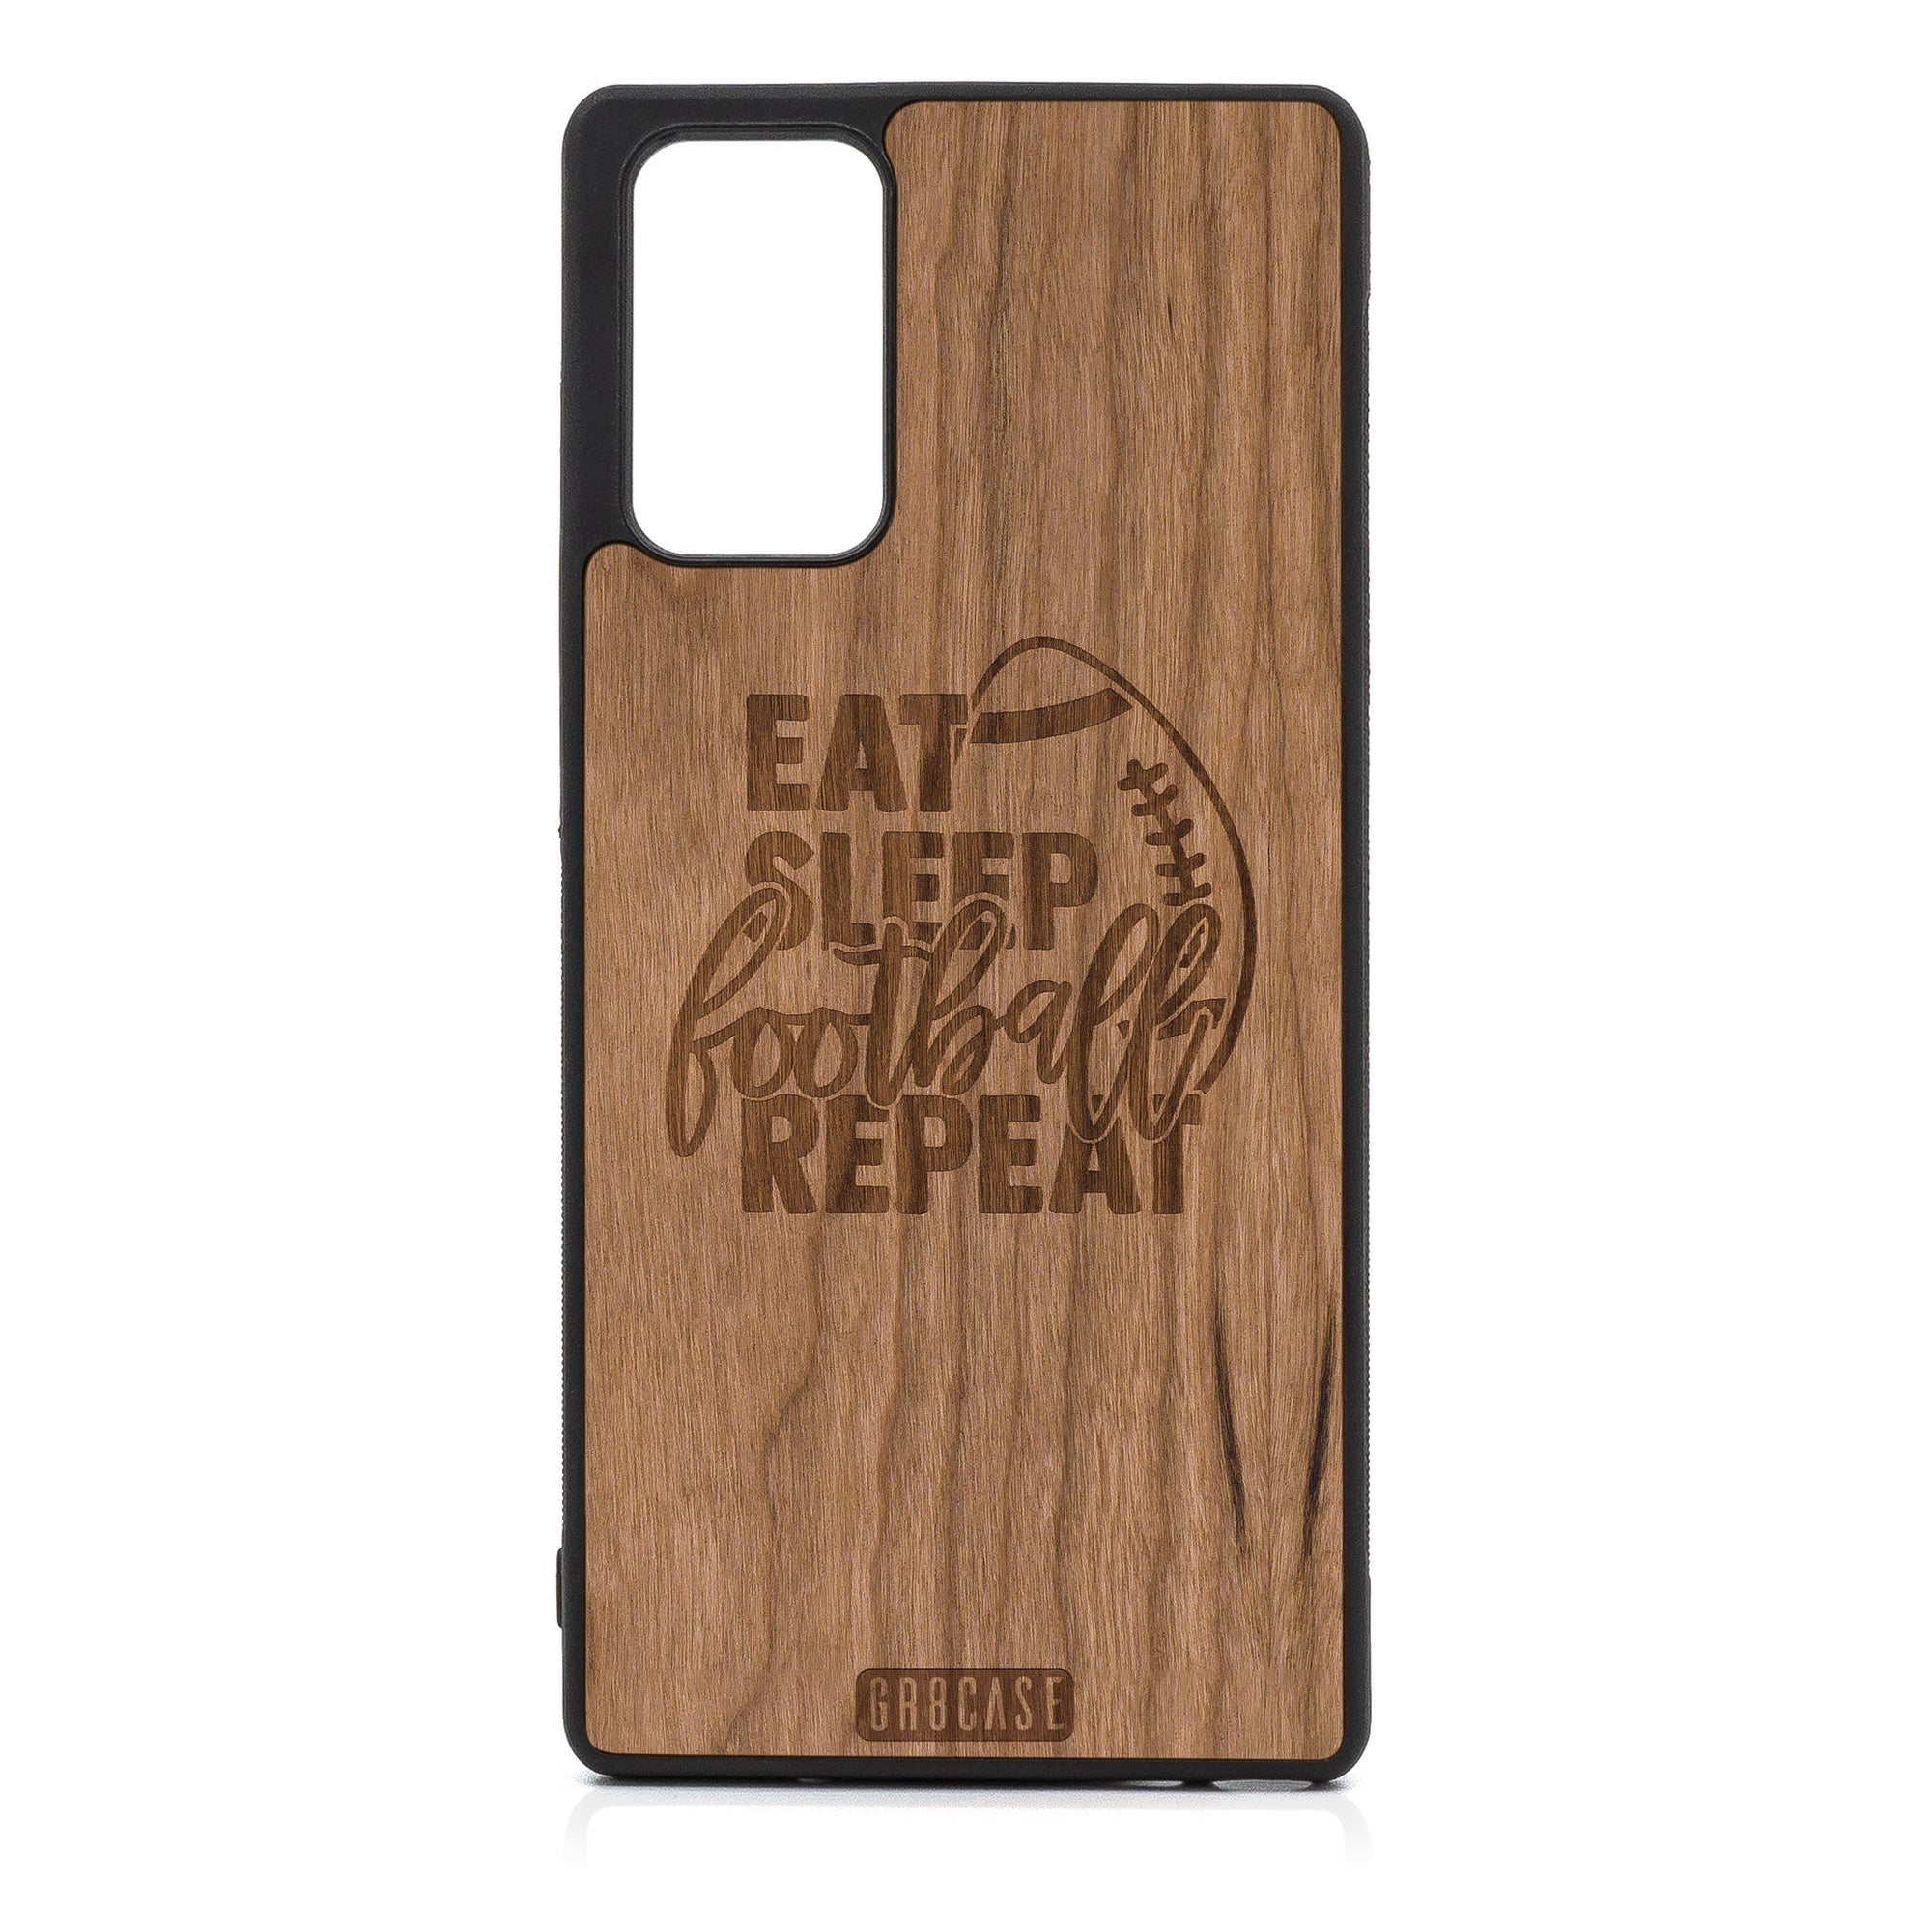 Eat Sleep Softball Repeat Design Wood Case For Samsung Galaxy A53 5G